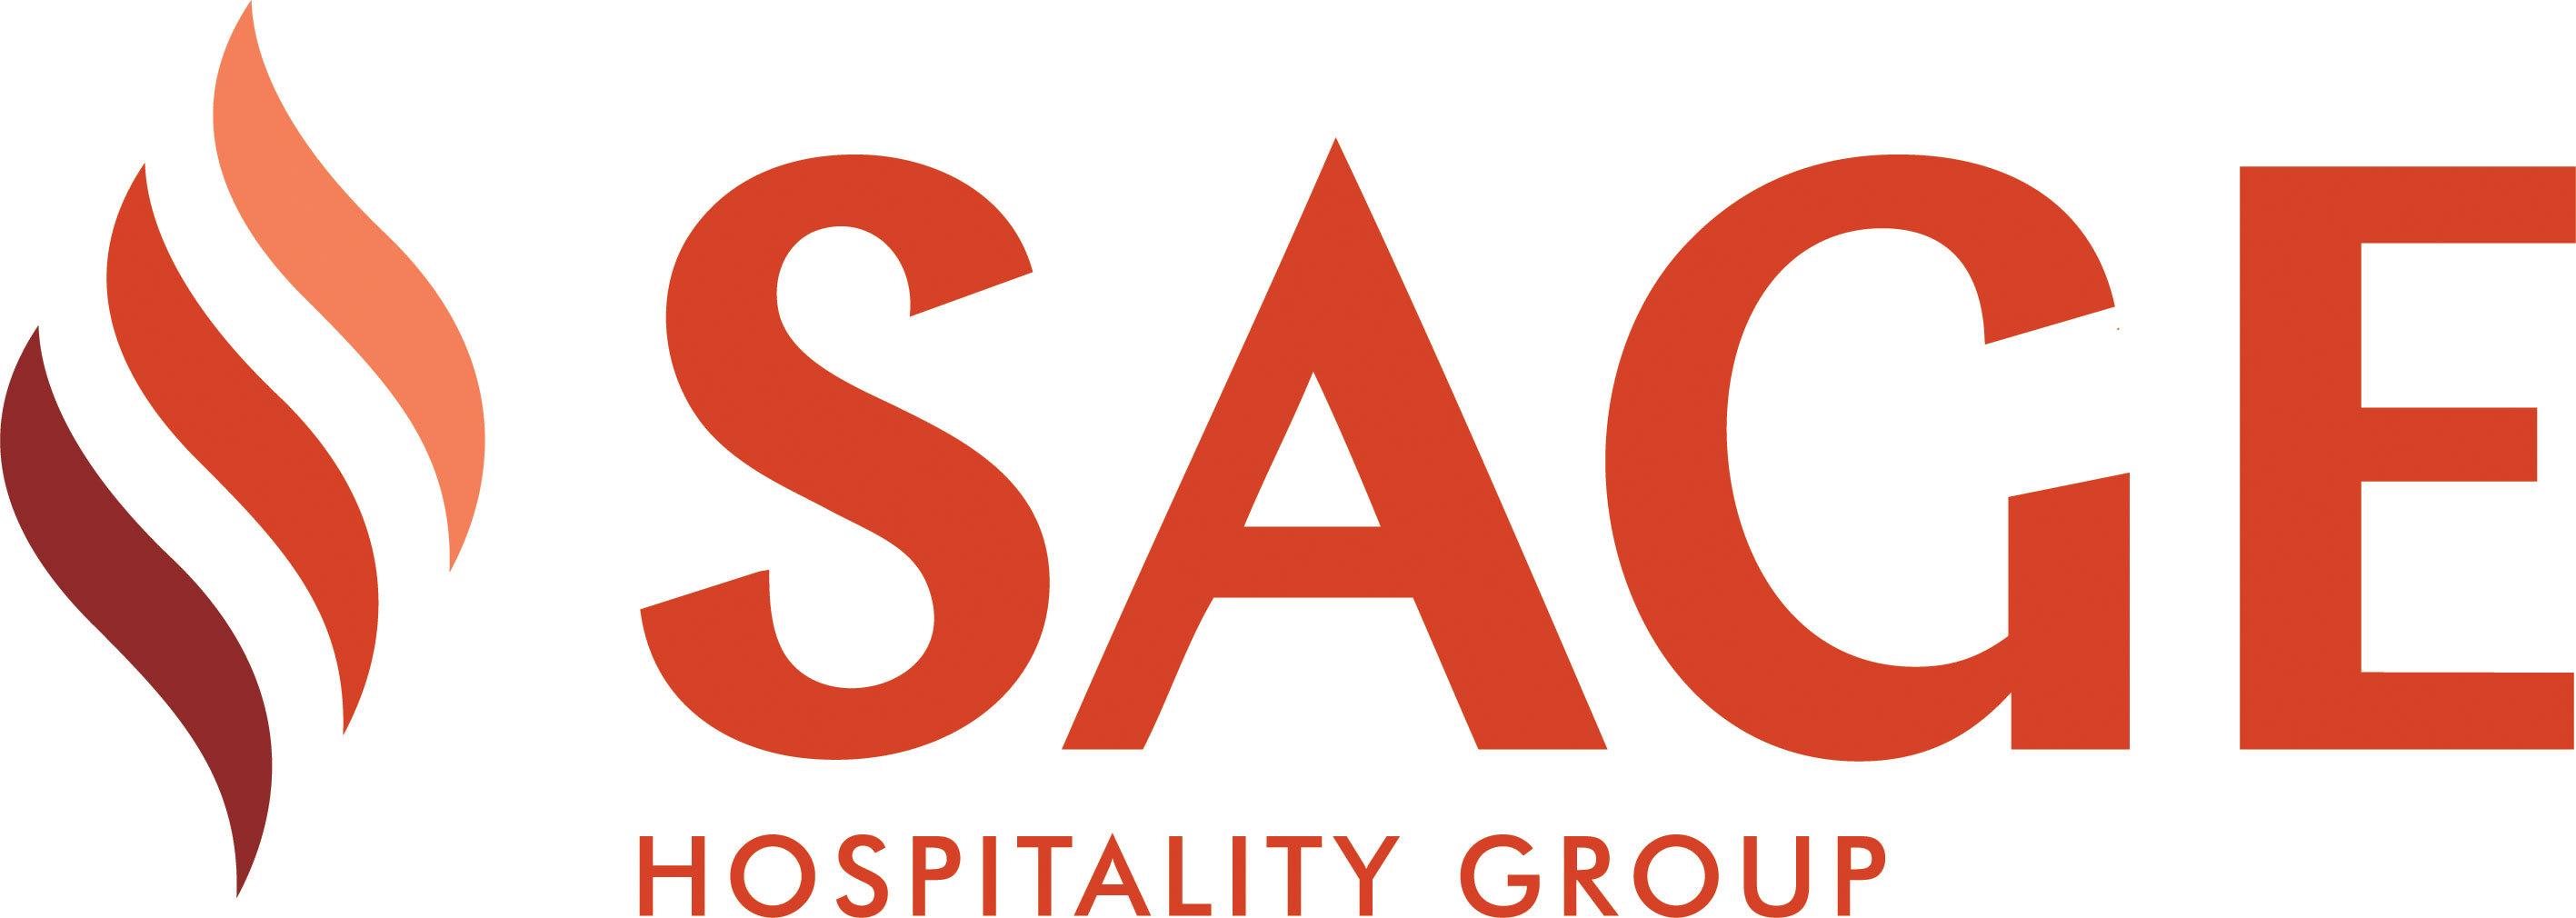 Sage Hospitality logo